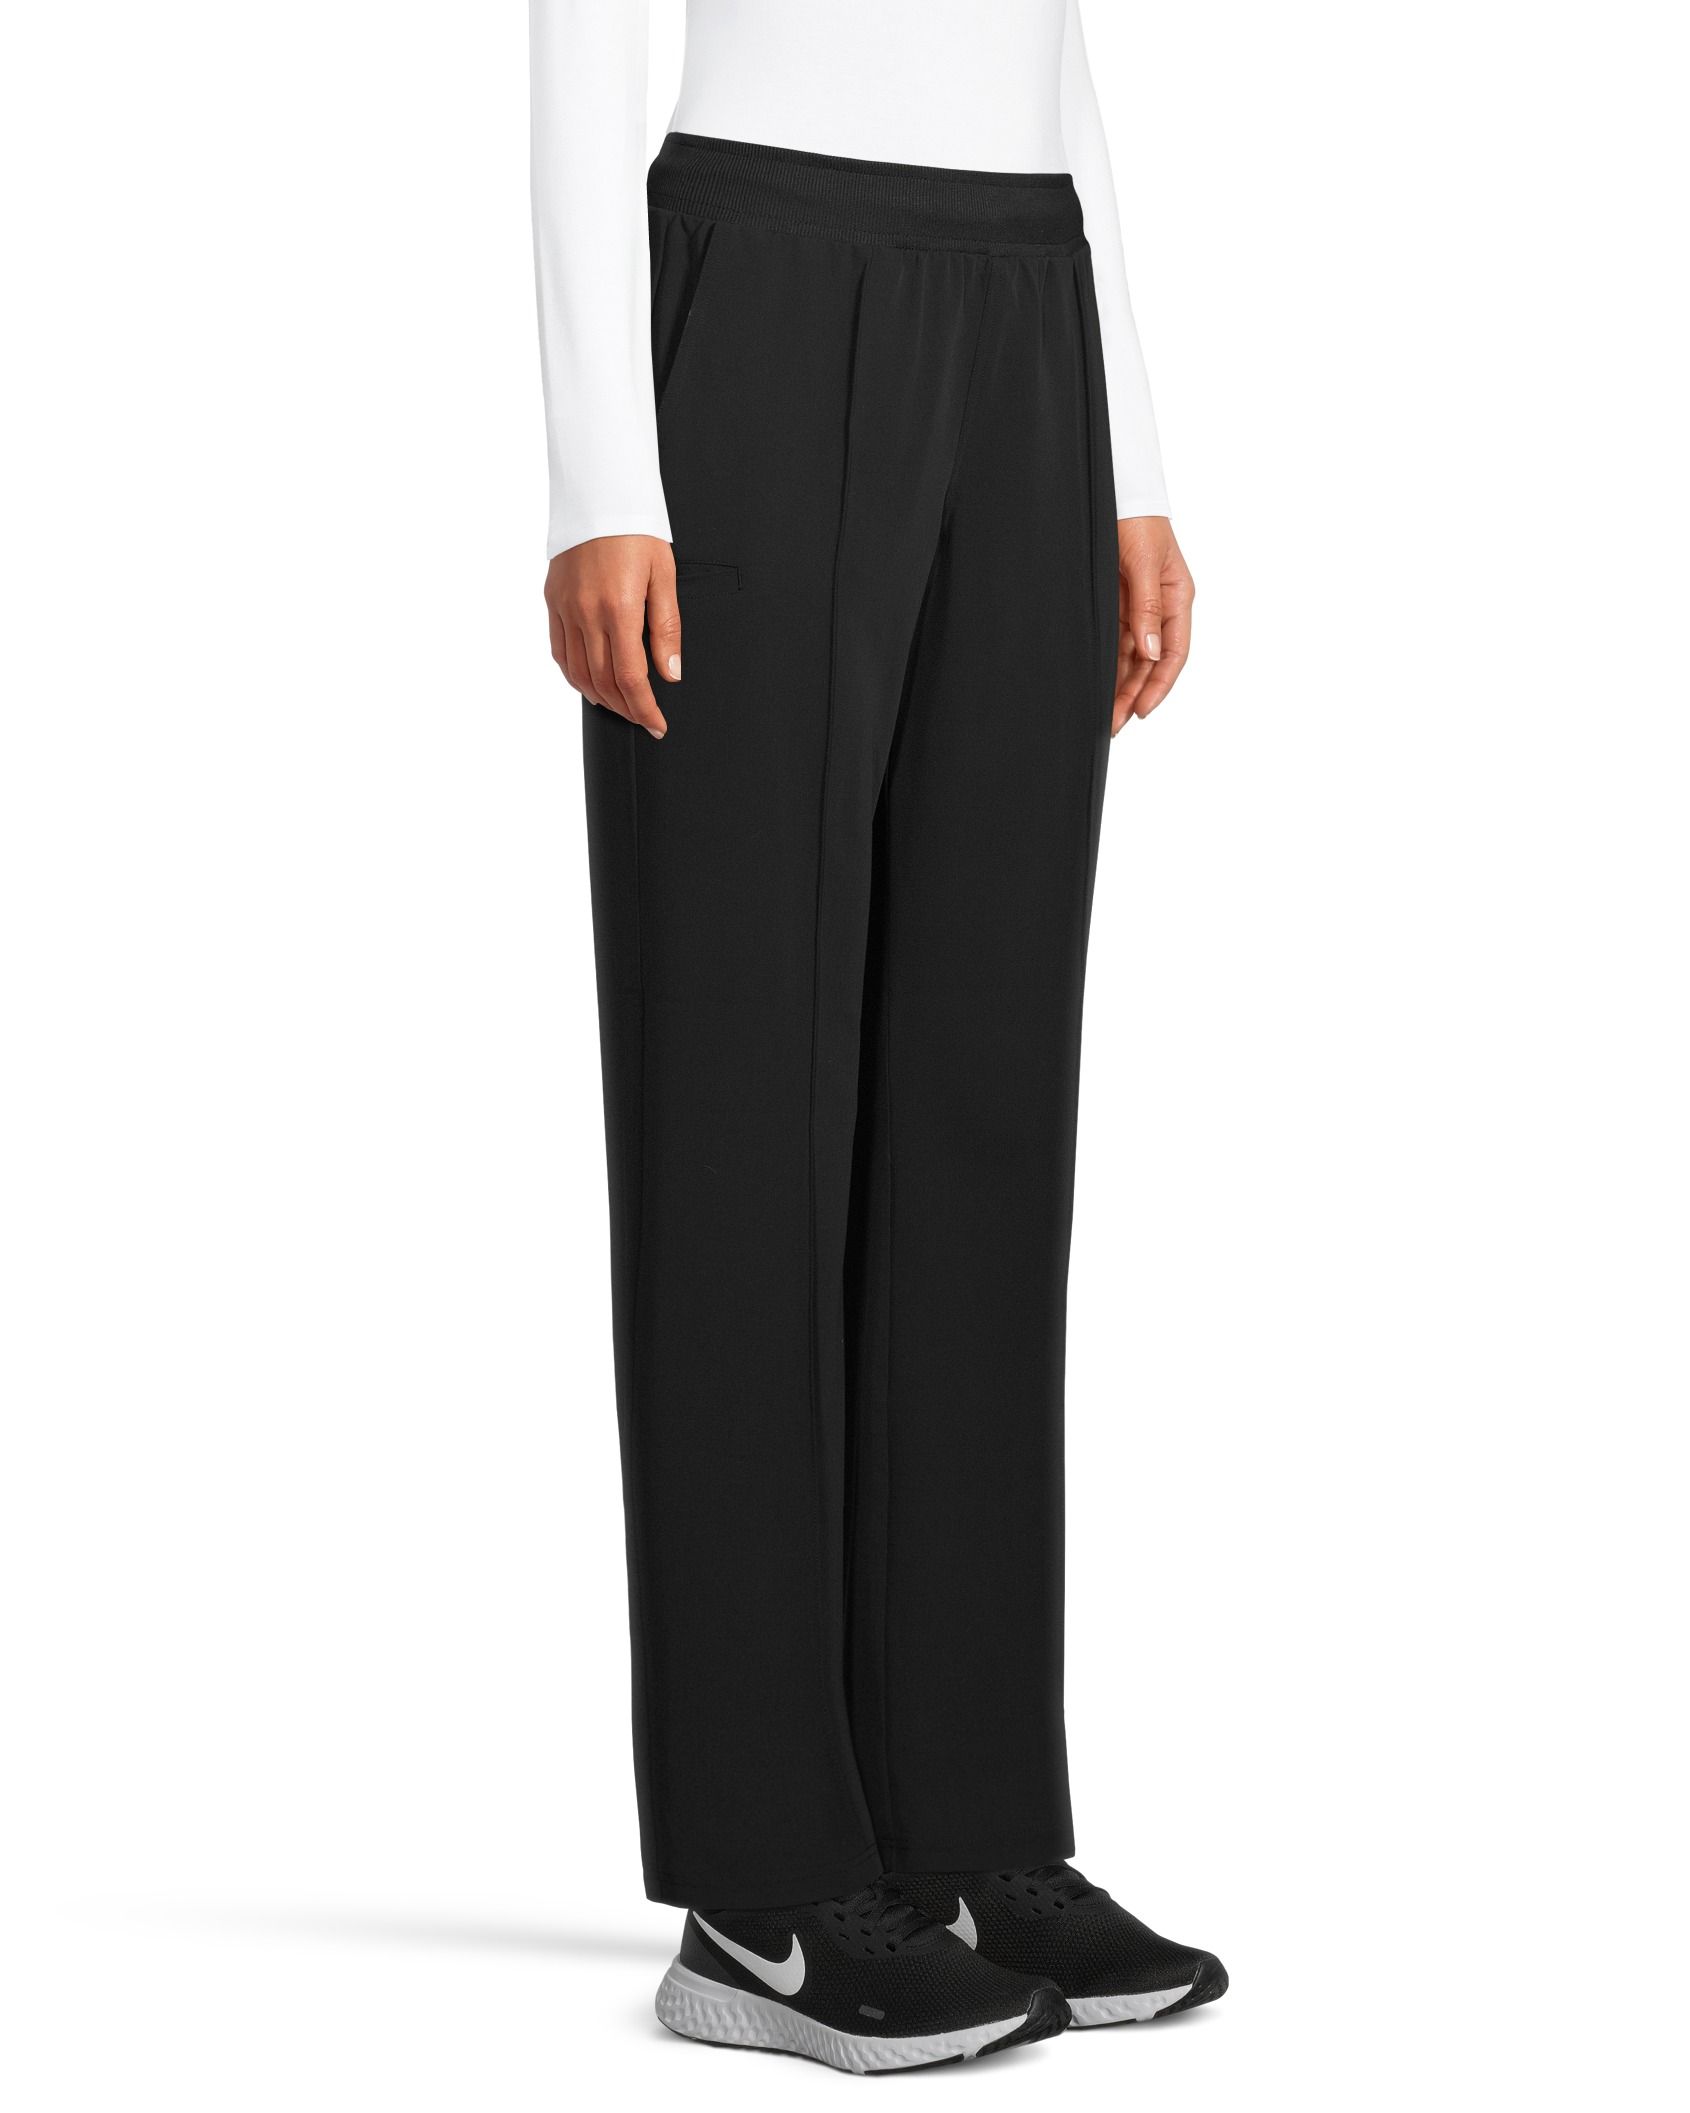 Benchmark Trousers Classic, Work Trousers, Women, Black, Poly-Cotton, Waist  30, Leg 33, Long, Size 12 T24 BLACK T 12